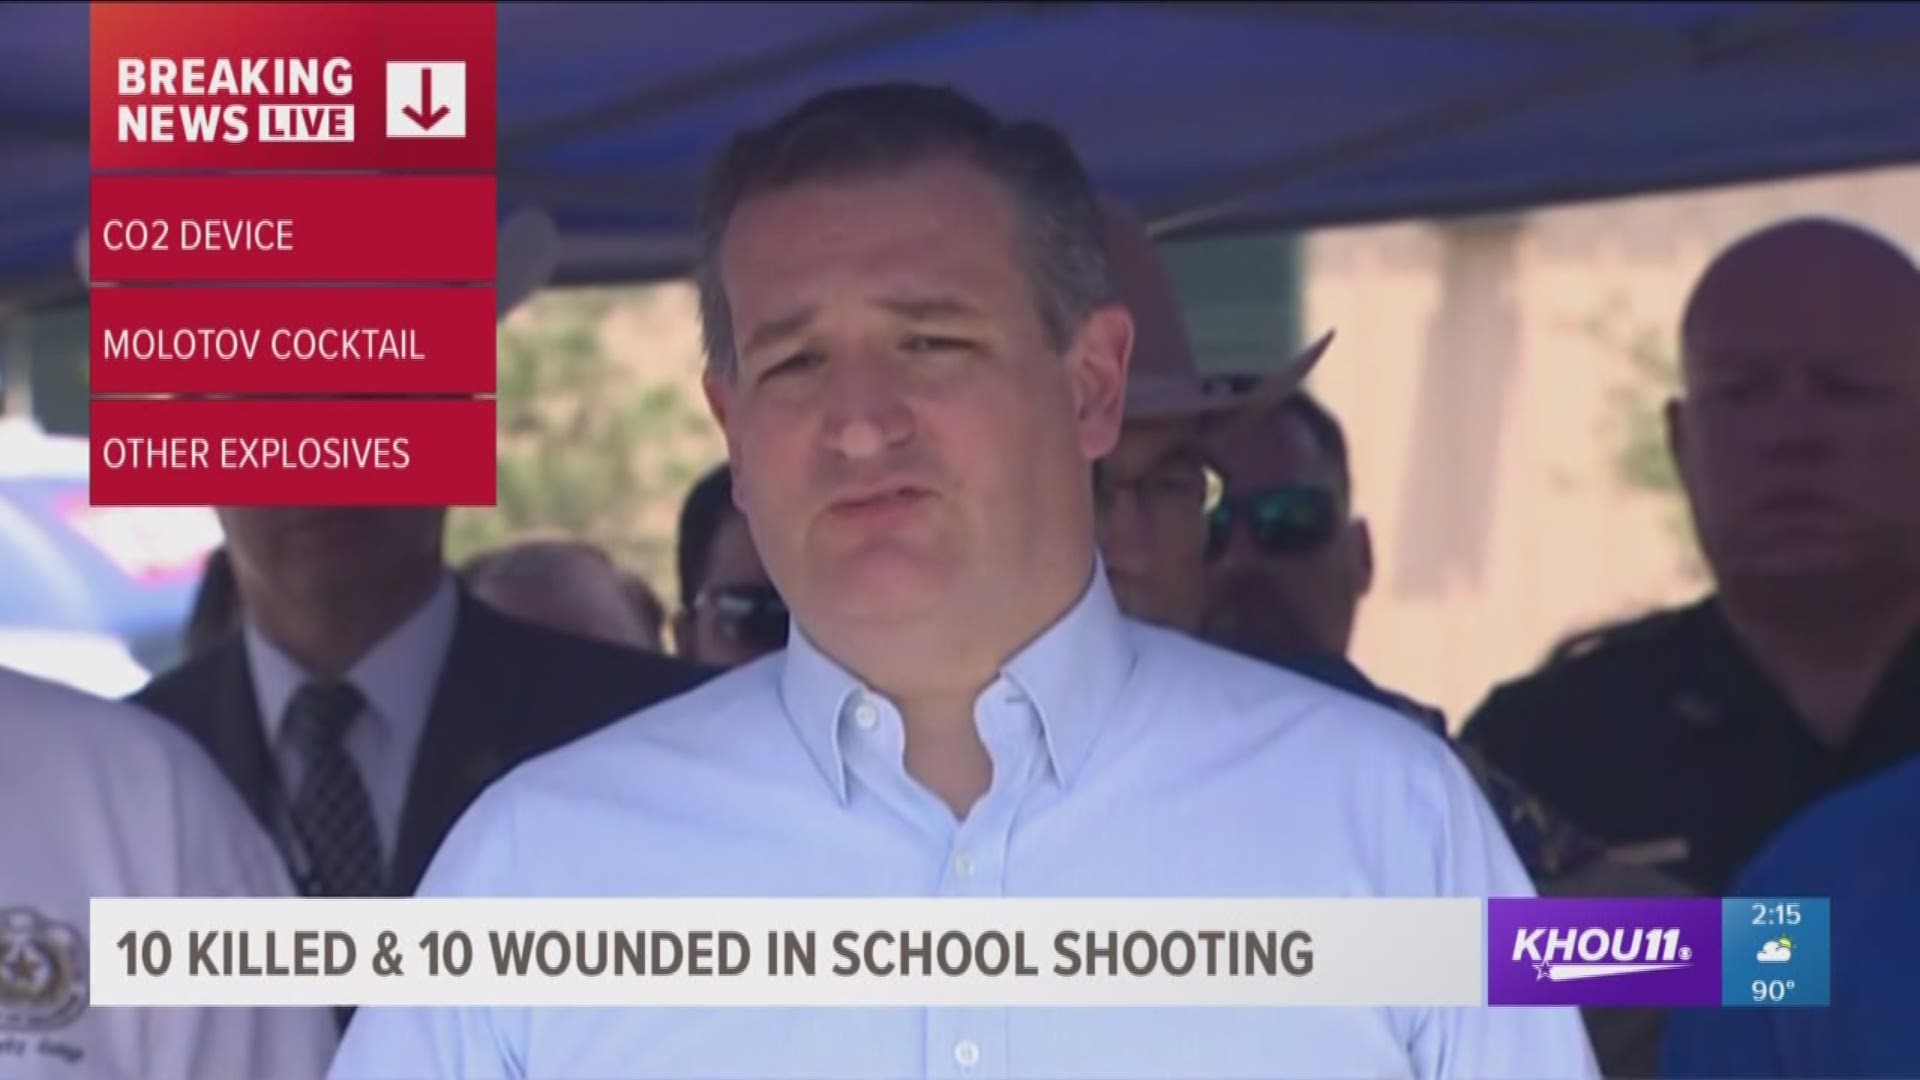 U.S. Senator Ted Cruz spoke at a presser on Friday following the deadly shooting at Santa Fe High School in Santa Fe, Texas.